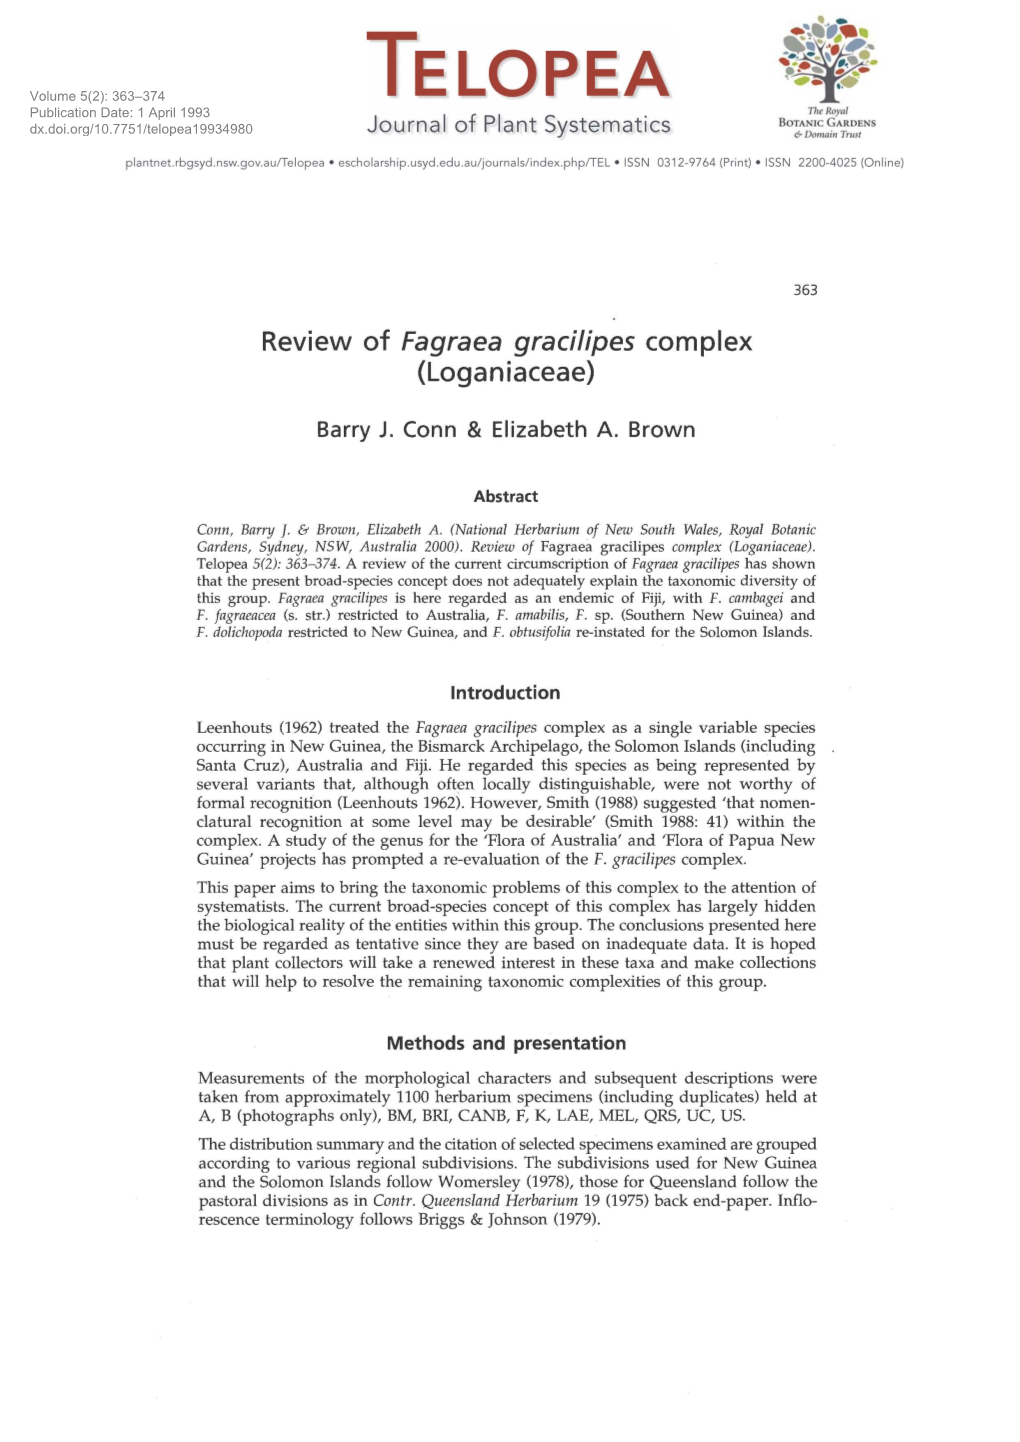 Review of Fagraea Gracilipes Complex (Loganiaceae)